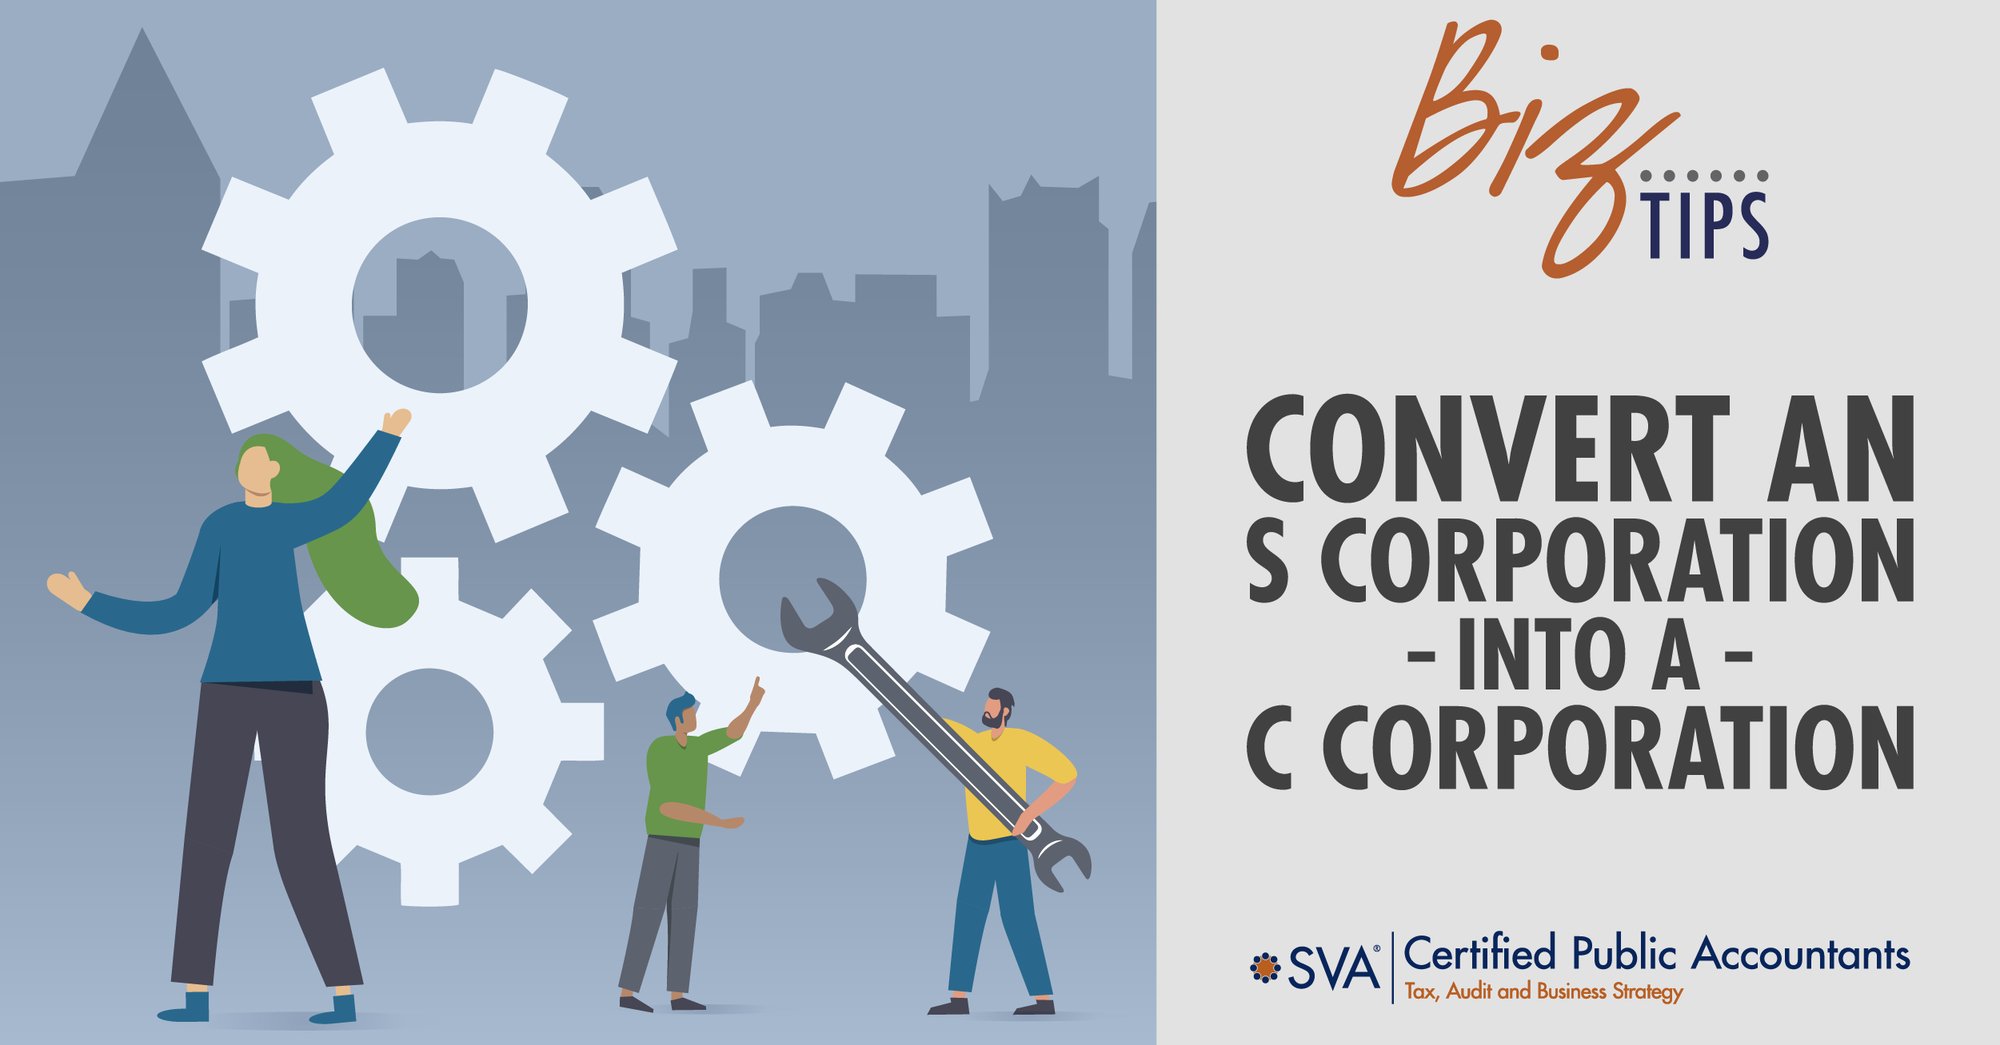 sva-certified-public-accountants-biz-tips-convert-an-s-corporation-into-a-c-corporation